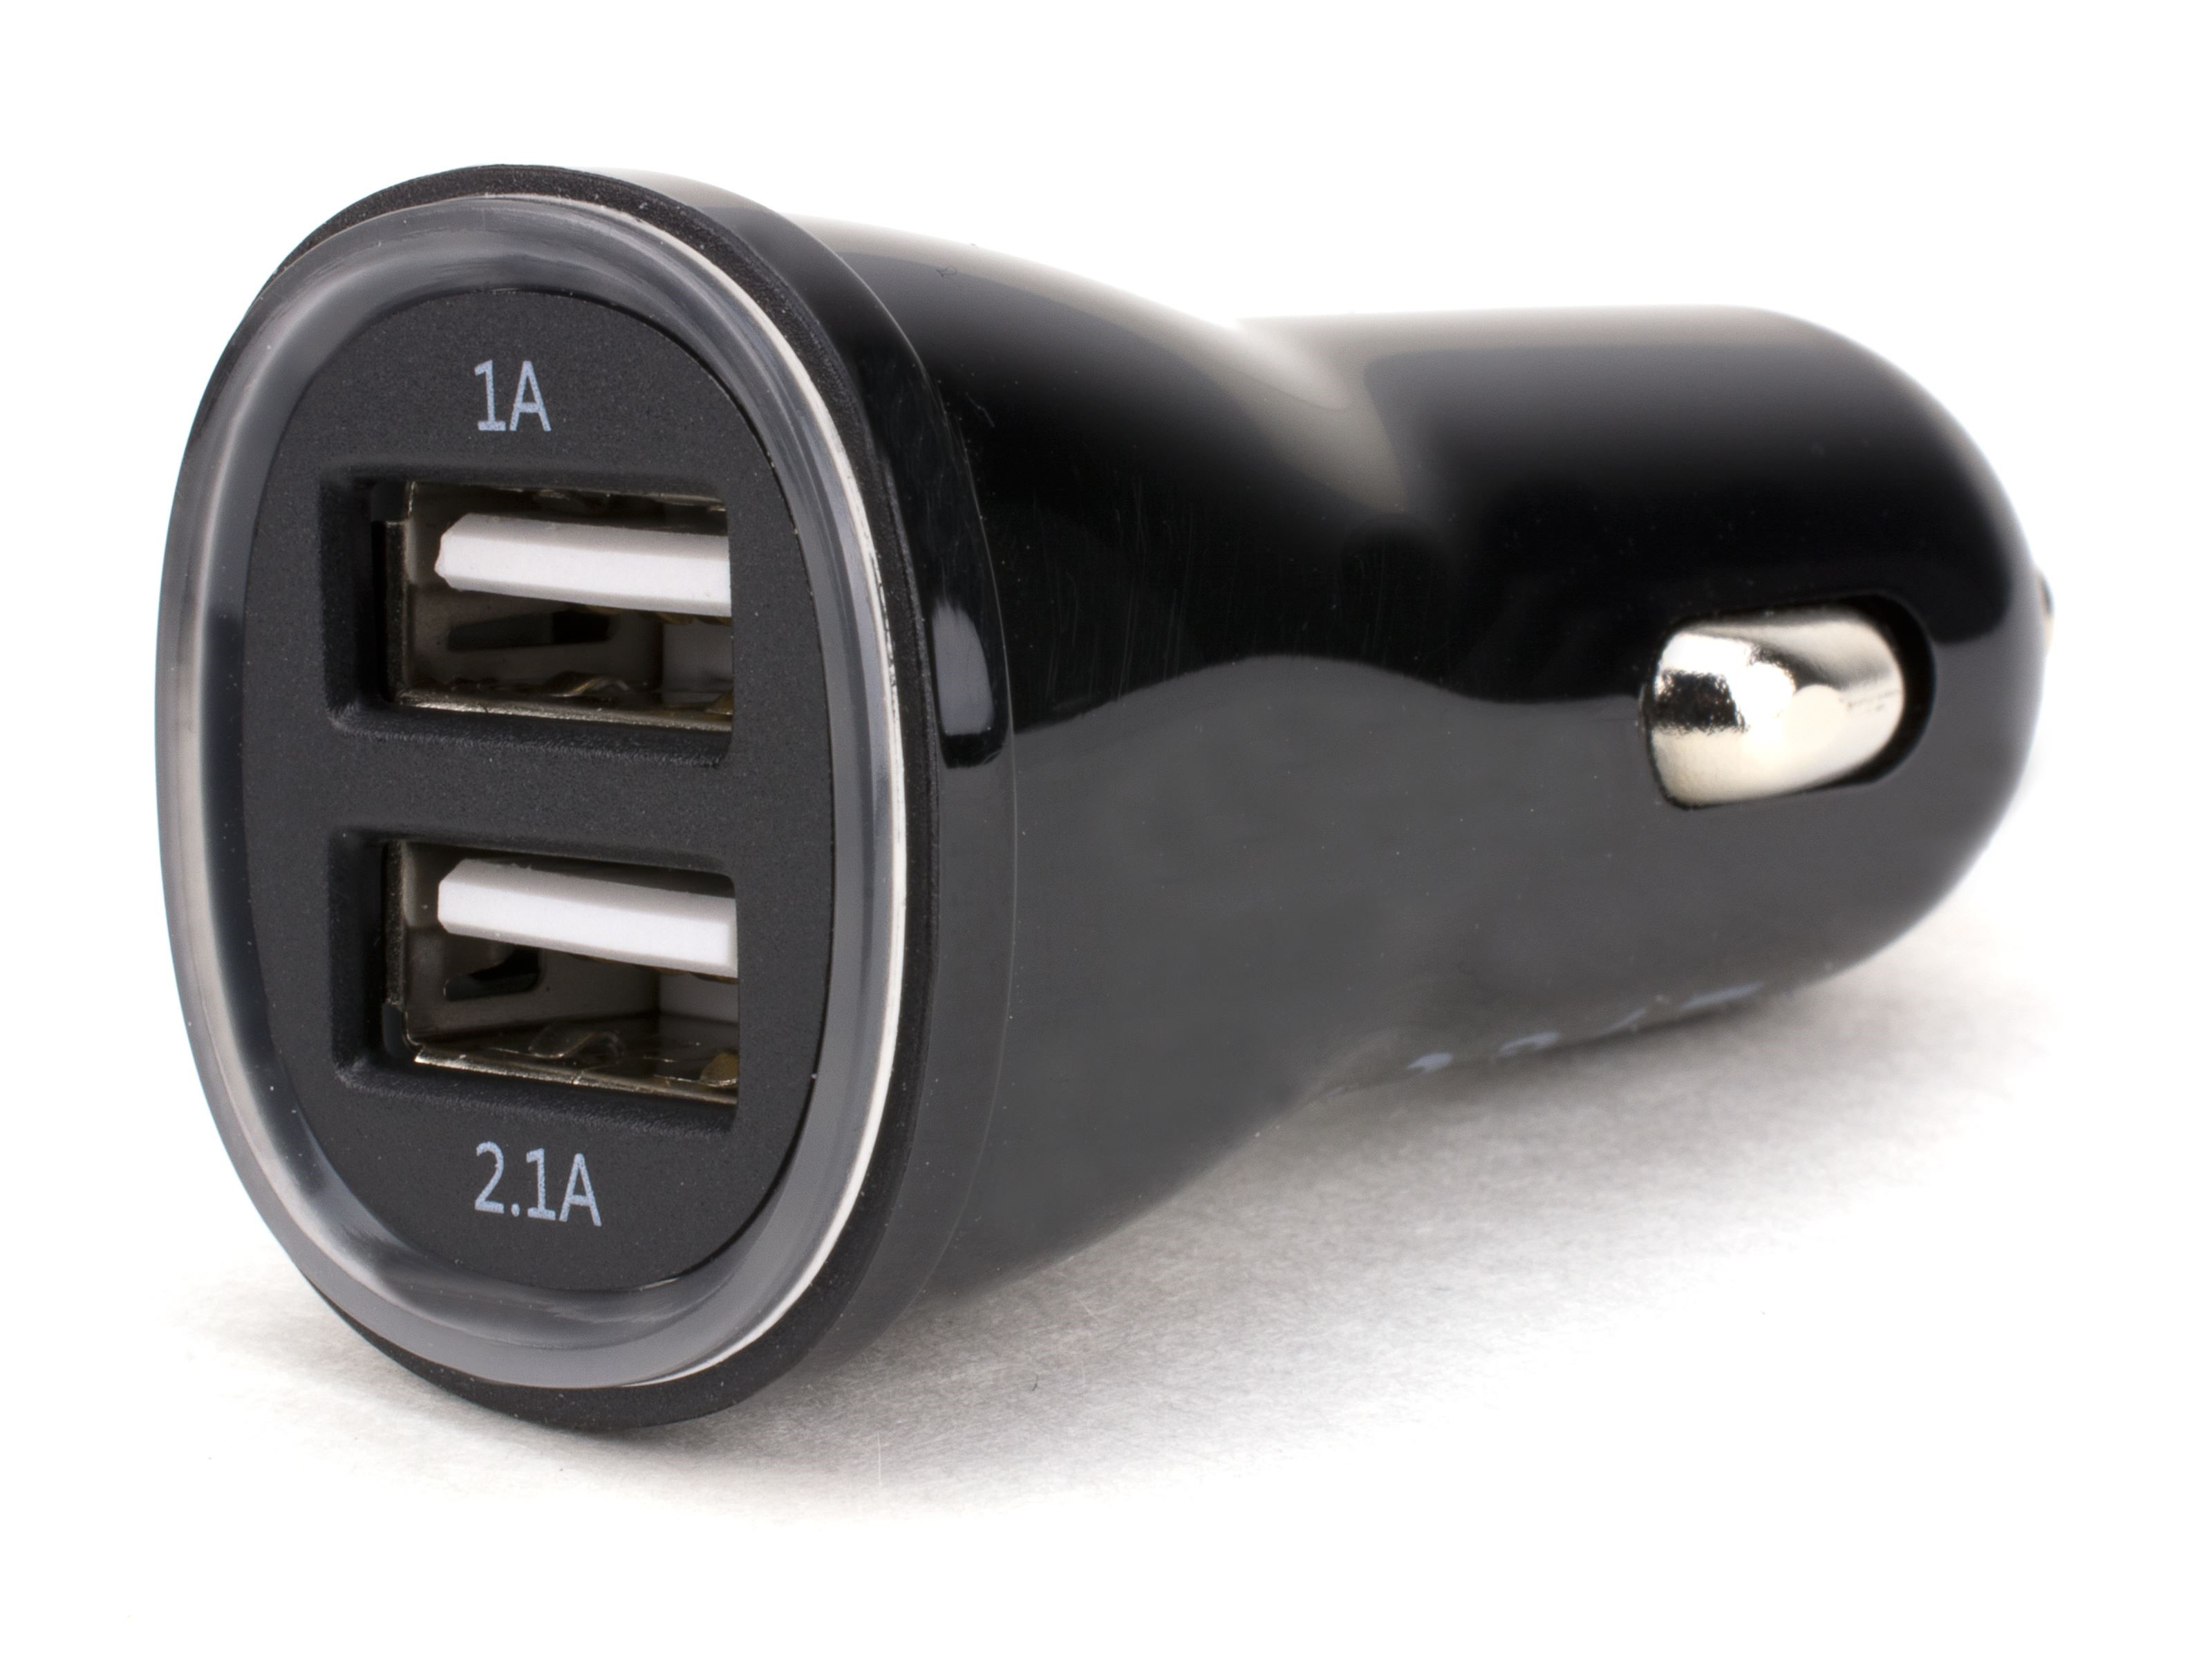 ACV - Spannungswandler 12V->5V/2,1A inkl. 1m USB-Kabel, Spannungswandler  12V->5V/2,1A inkl. 1m USB-Kabel, USB - Kabel, Kabel und Stecker, Car-Hifi-Zubehör, Zubehör